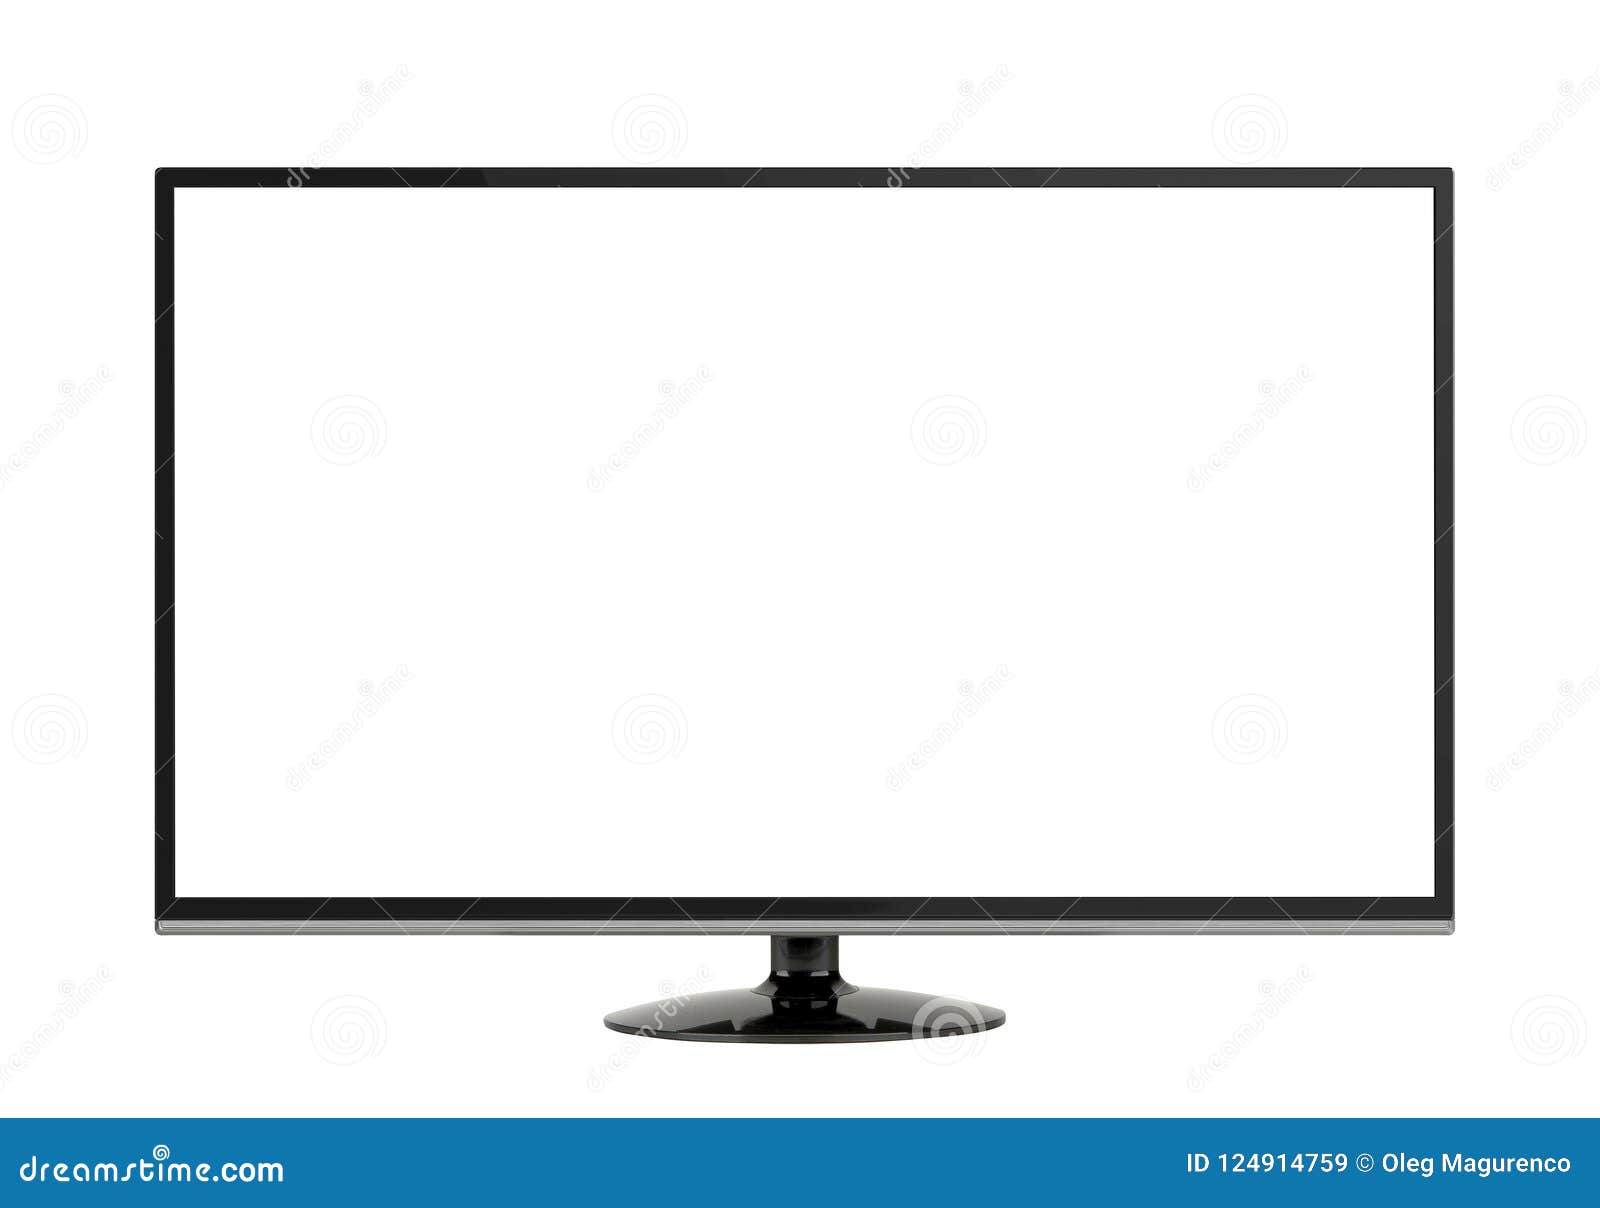 Computer Monitor Isolated on White Stock Image - Image of slim, desktop ...